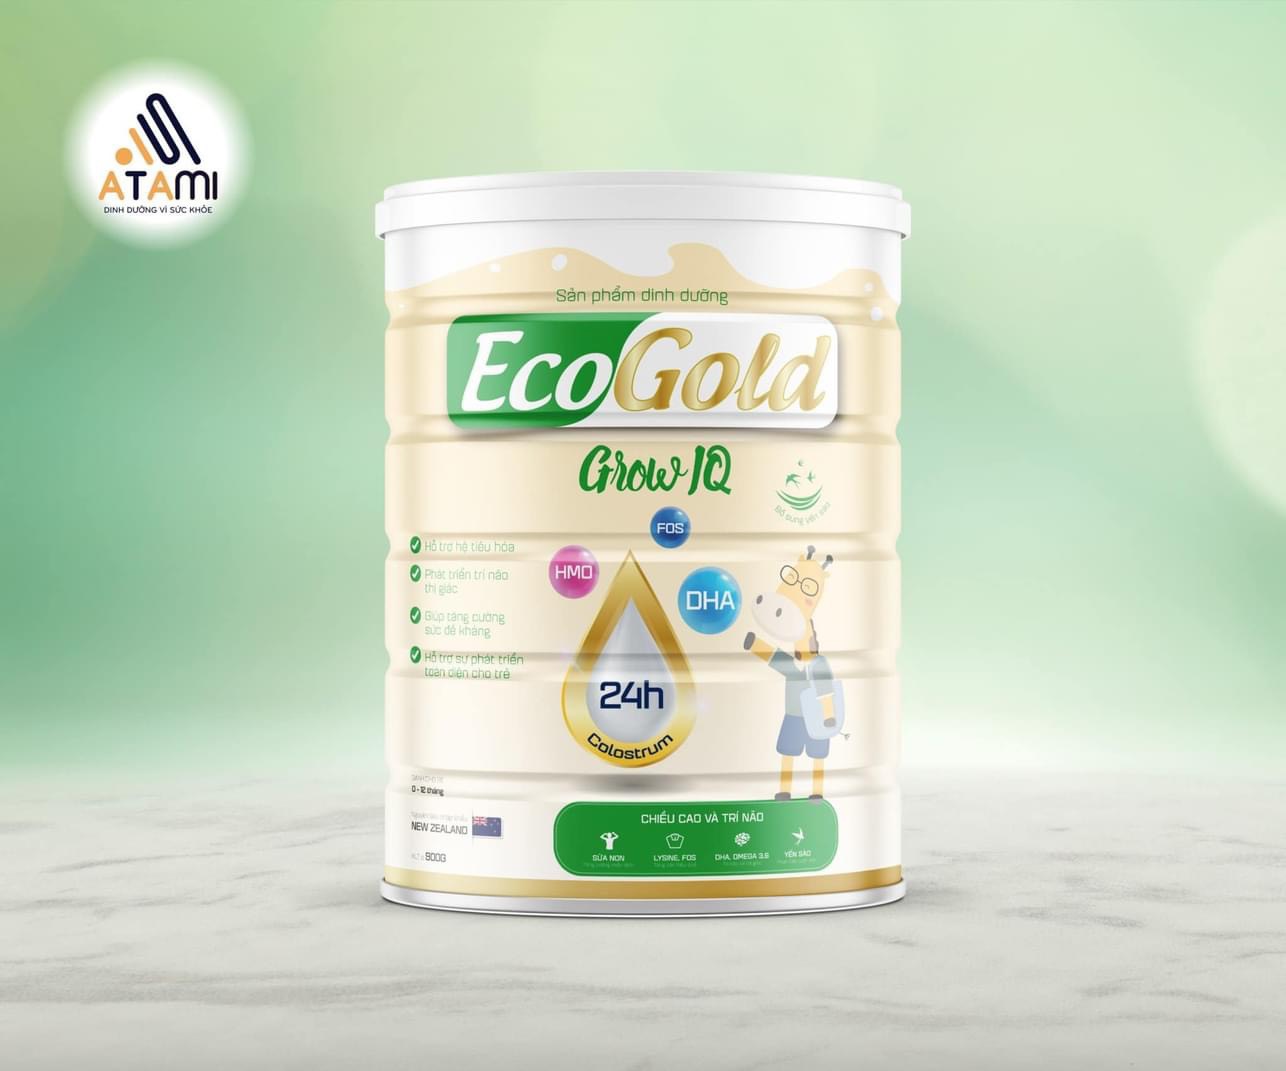 EcoGold Grow IQ Powdered Milk 800g